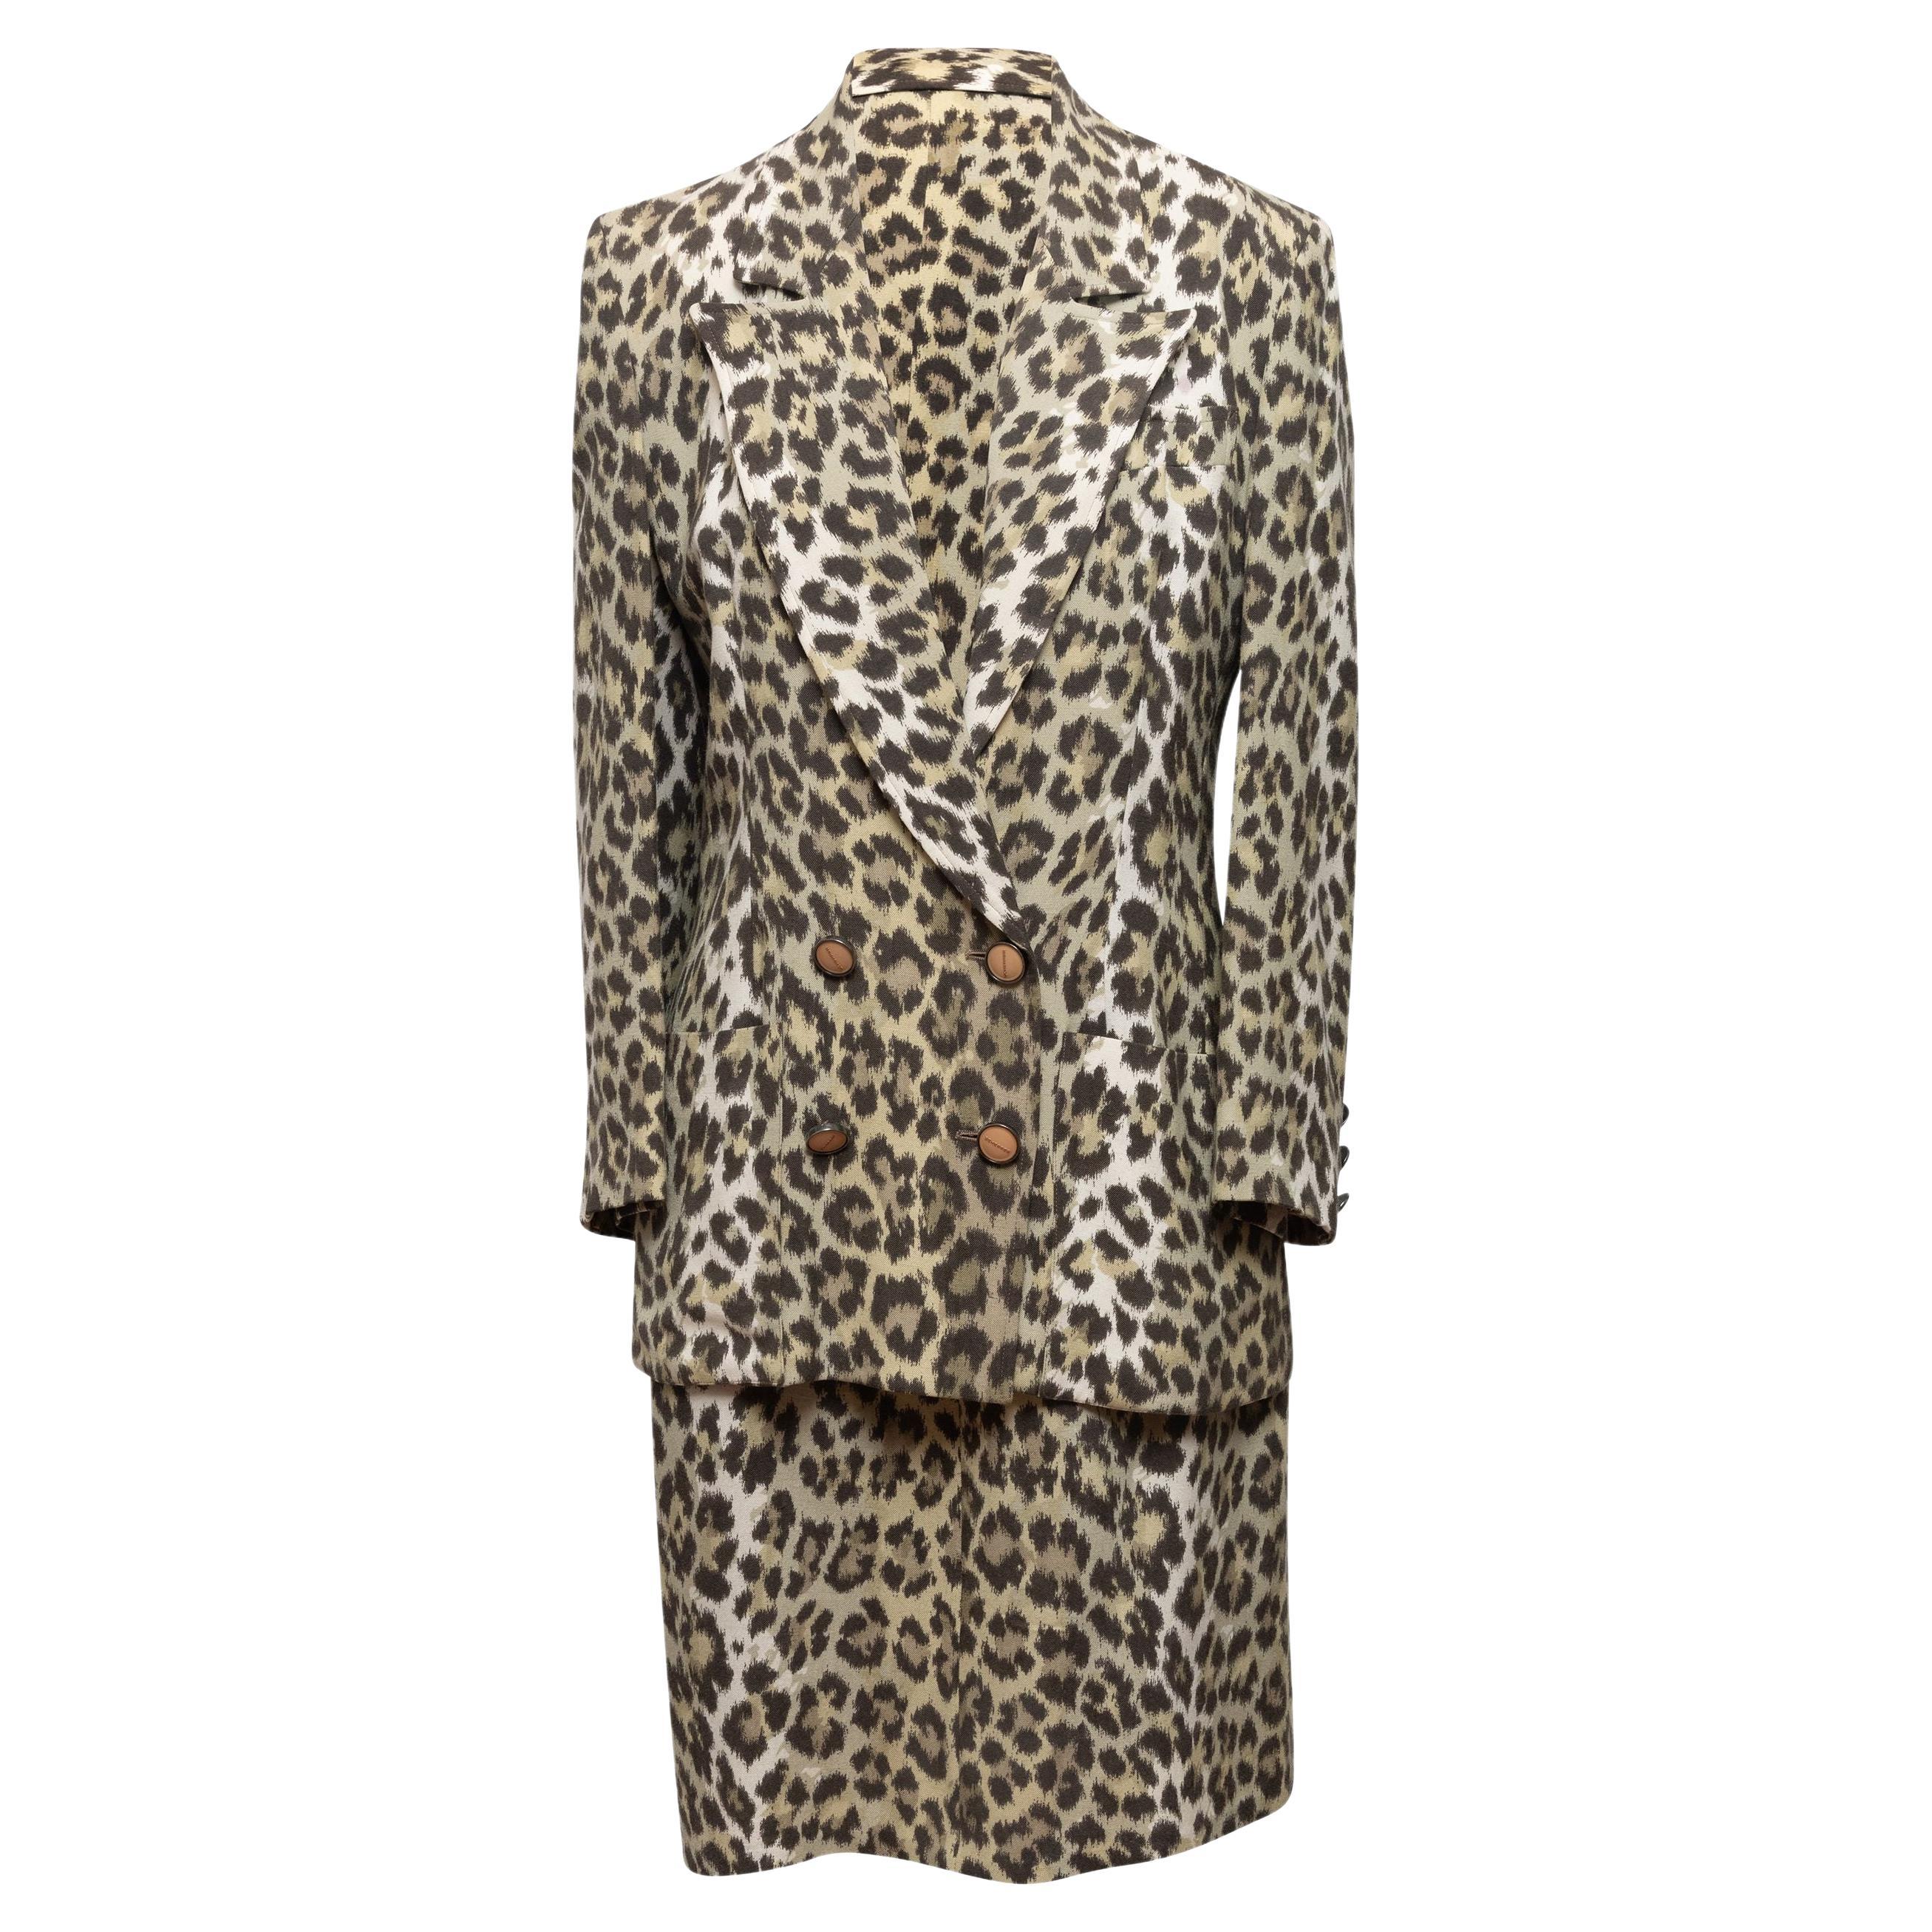 Jean Louis Scherrer Tan & Black Leopard Print Skirt Suit For Sale